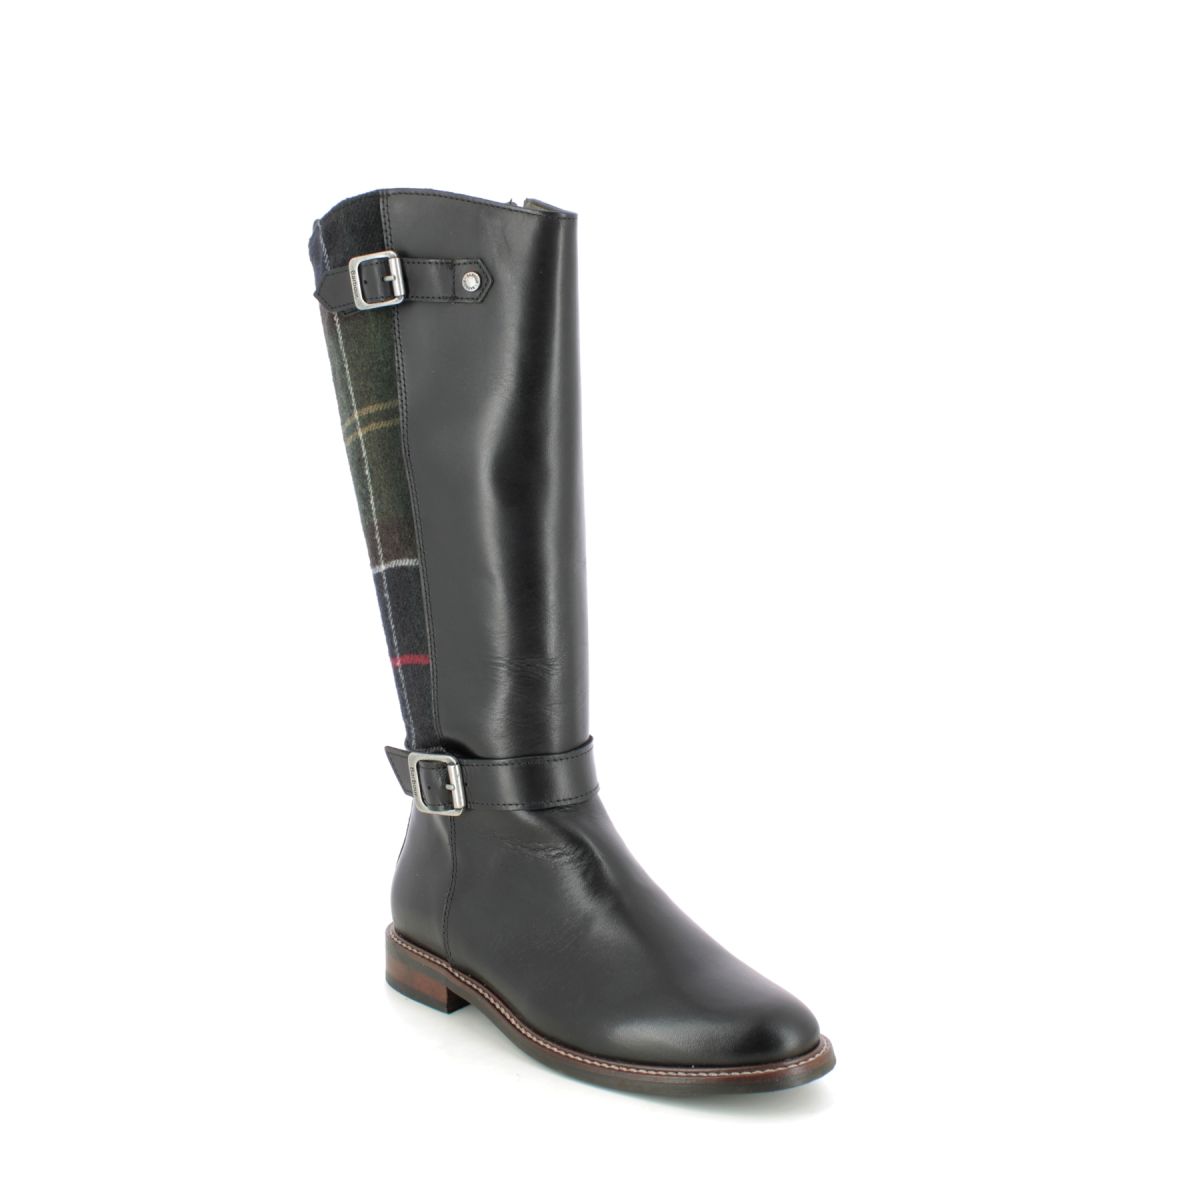 Barbour Wren Tartan Black Leather Boots Lfo0552-Bk32 In Size 6 In Plain Black Leather